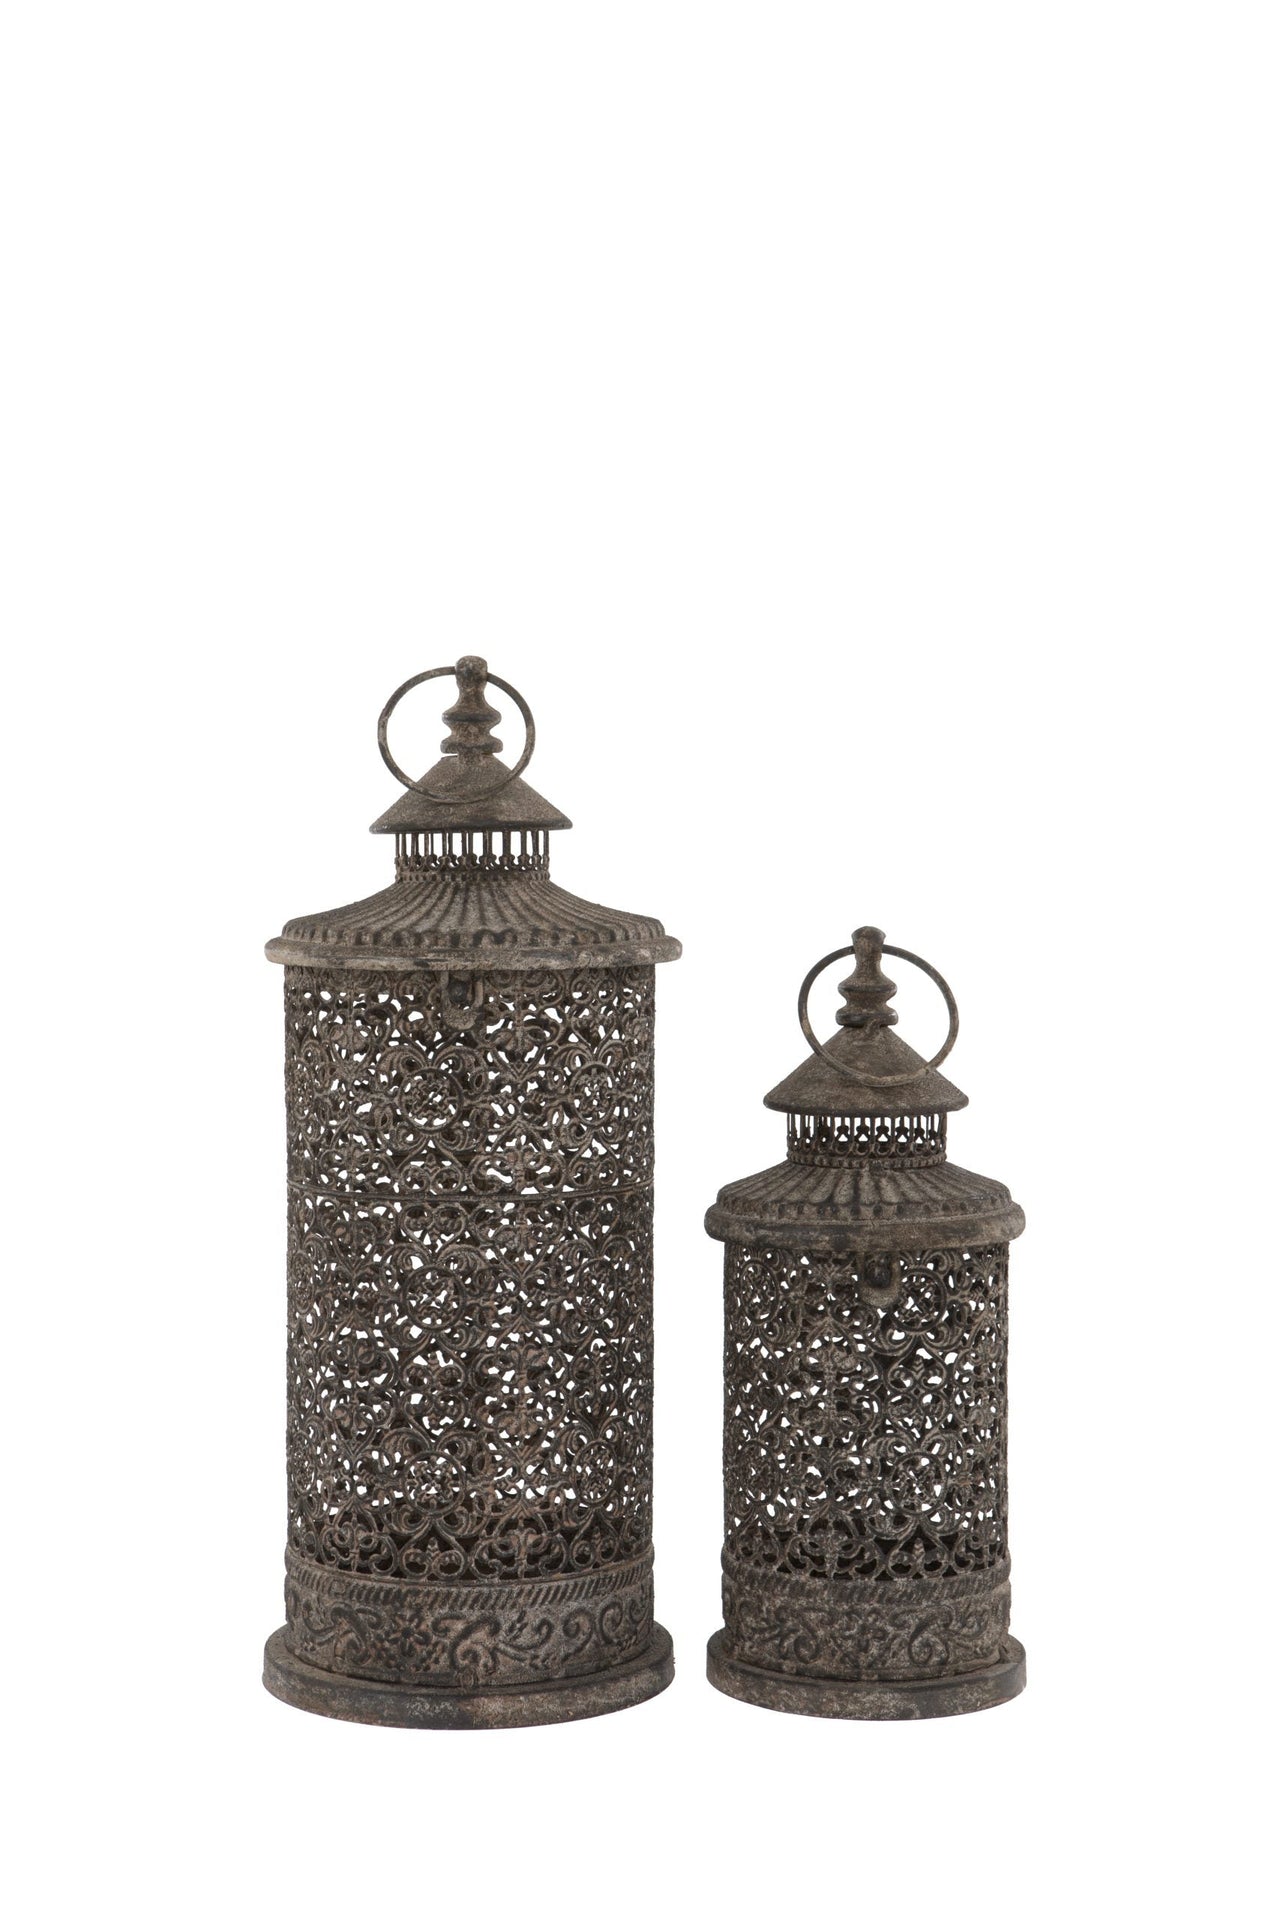 London Ornaments Lugano Lantern - Small